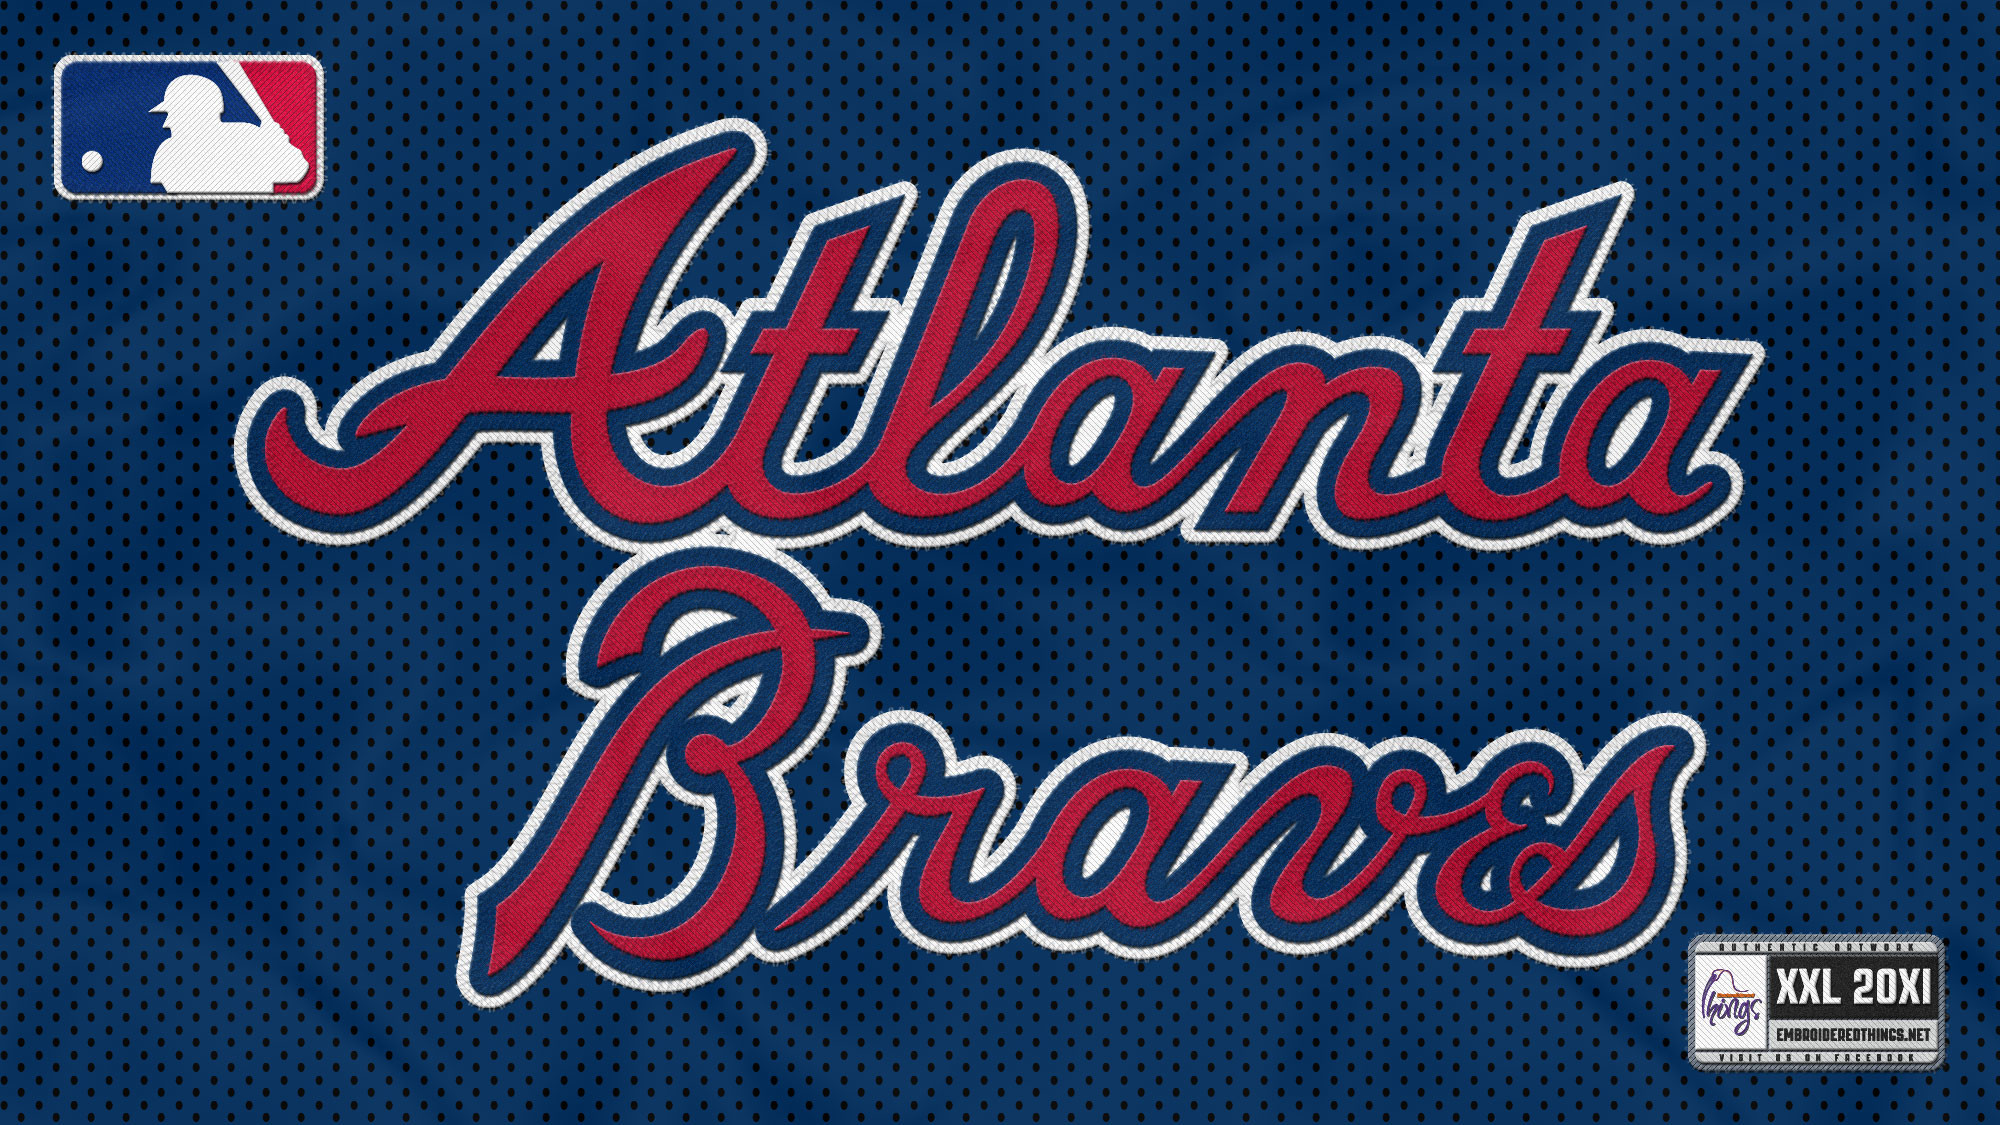 Atlanta Braves Team Wallpaper Images | Crazy Gallery